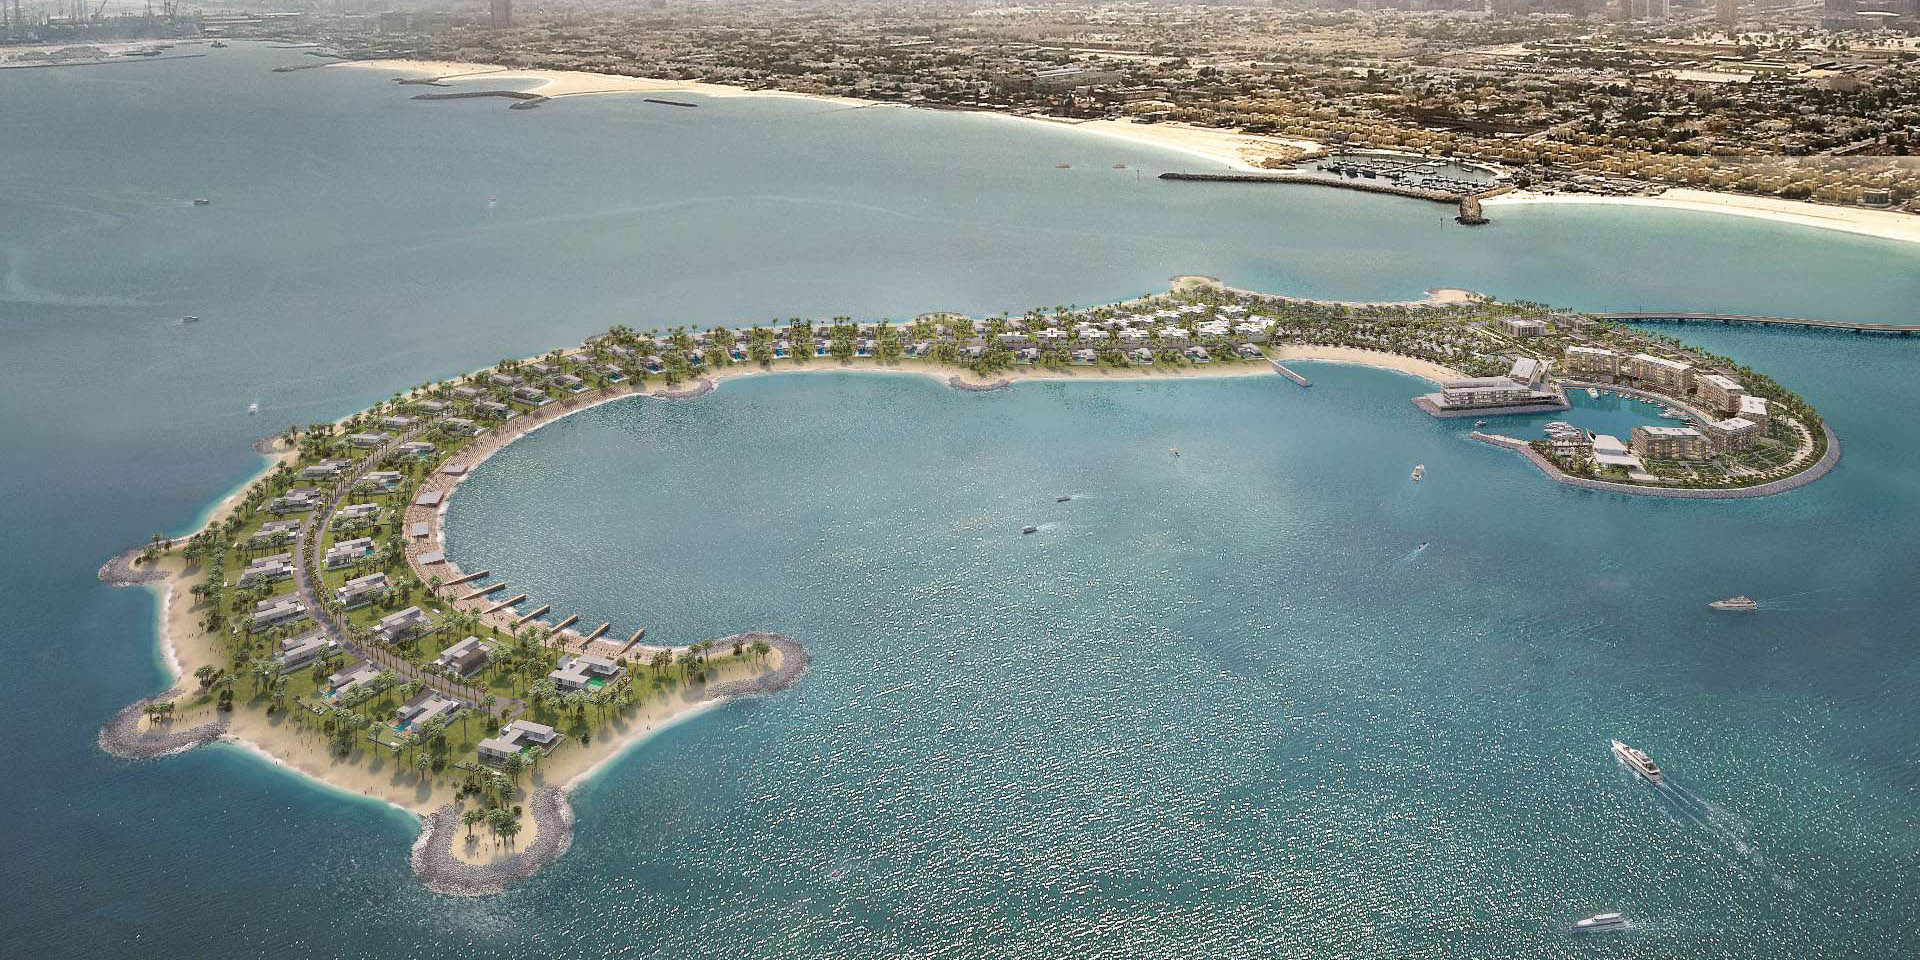 Dubai Resort on Seahorse-Shaped Island 